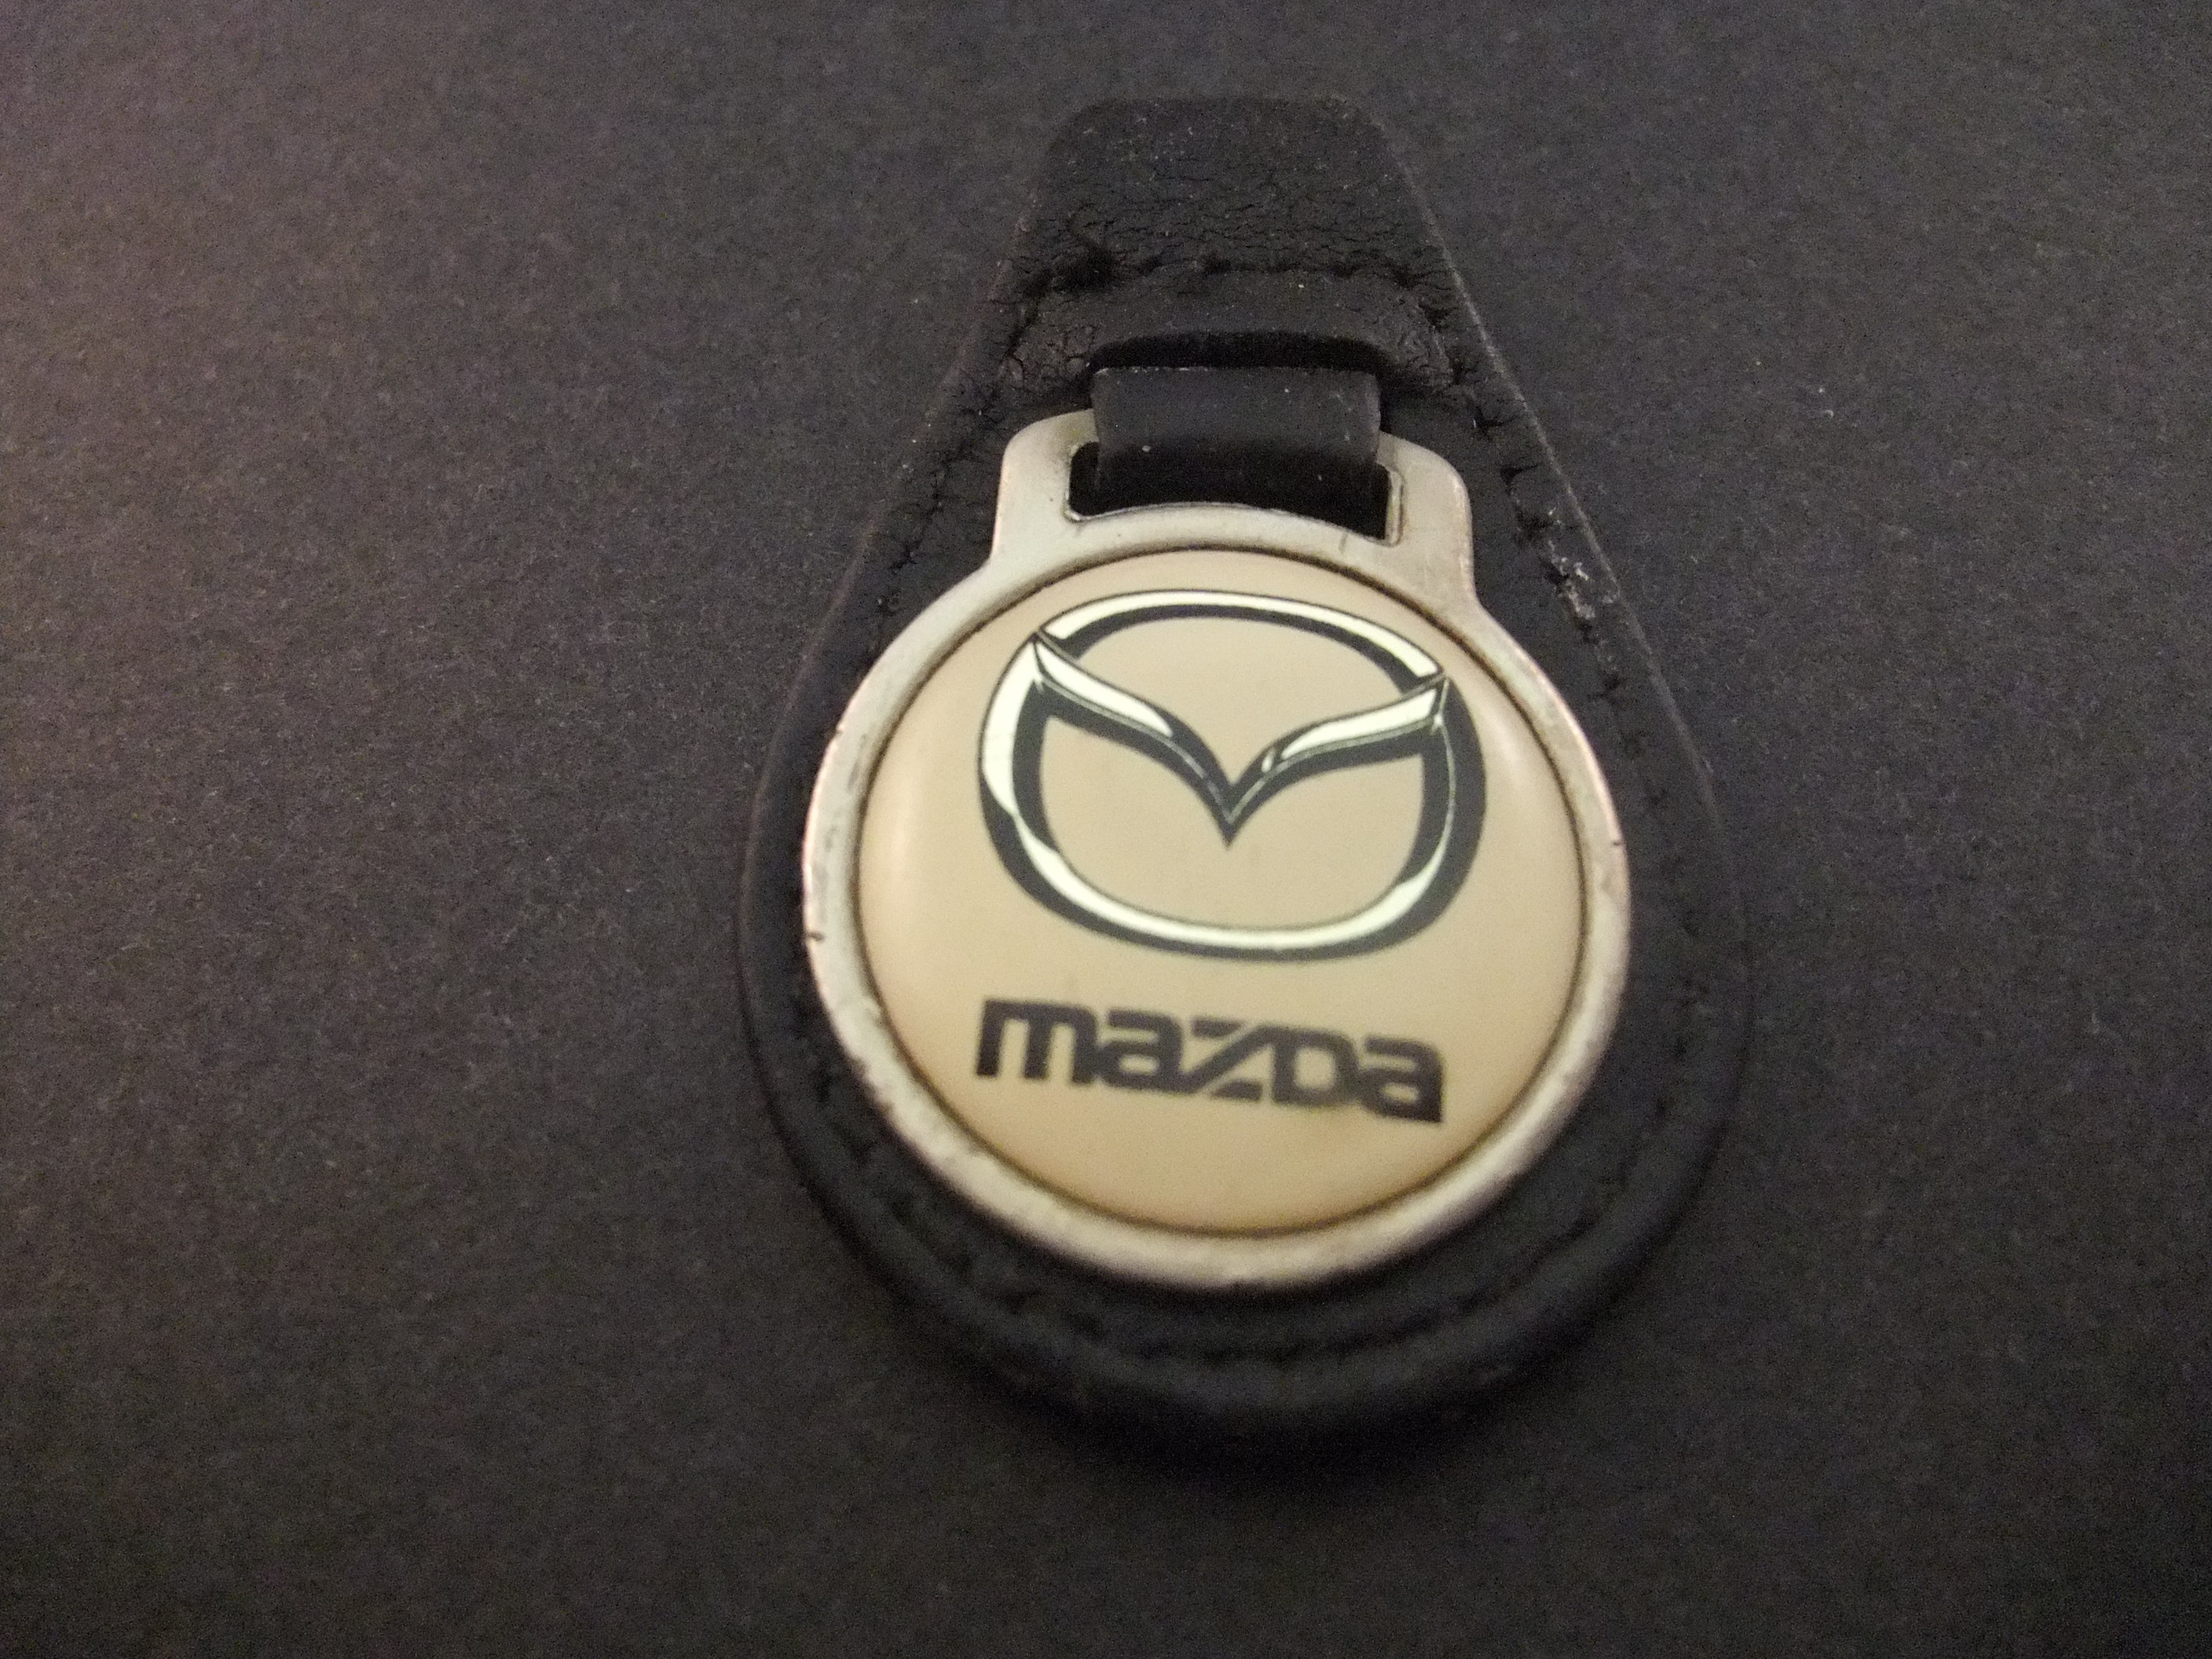 Mazda japans automerk logo zilverkleurig sleutelhanger